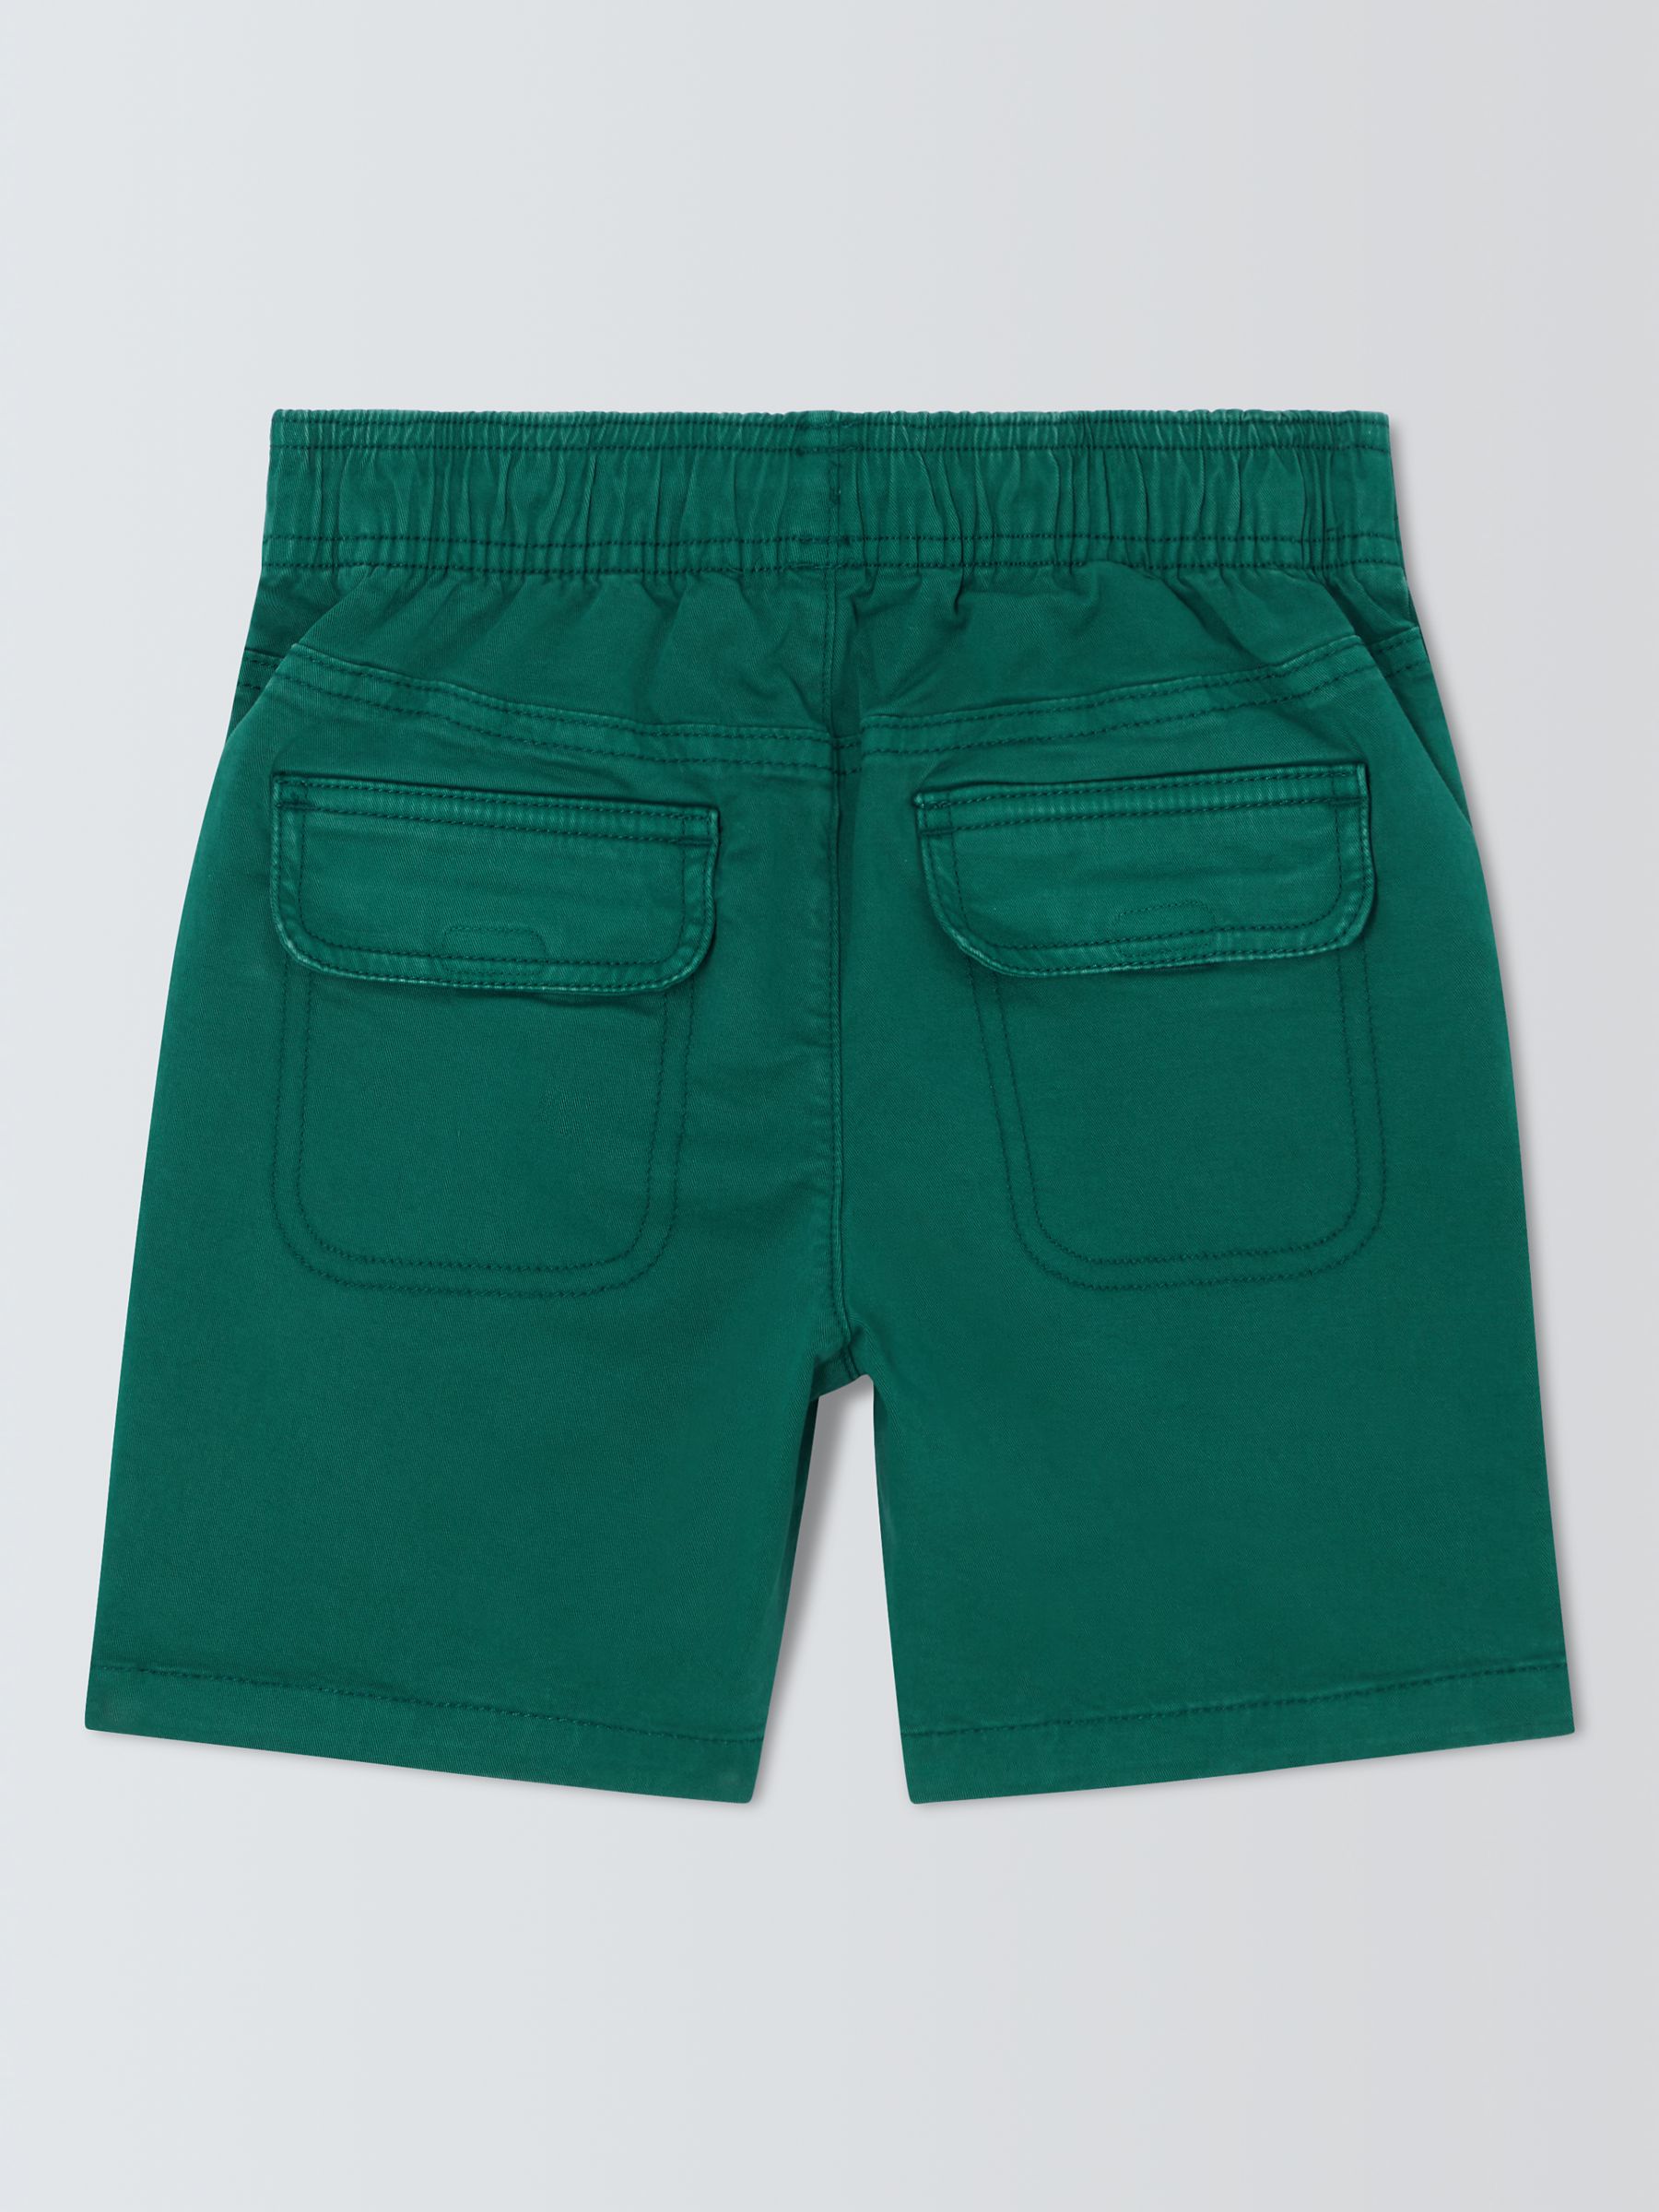 John Lewis Kids' Pull On Dock Shorts, Green, 10 years